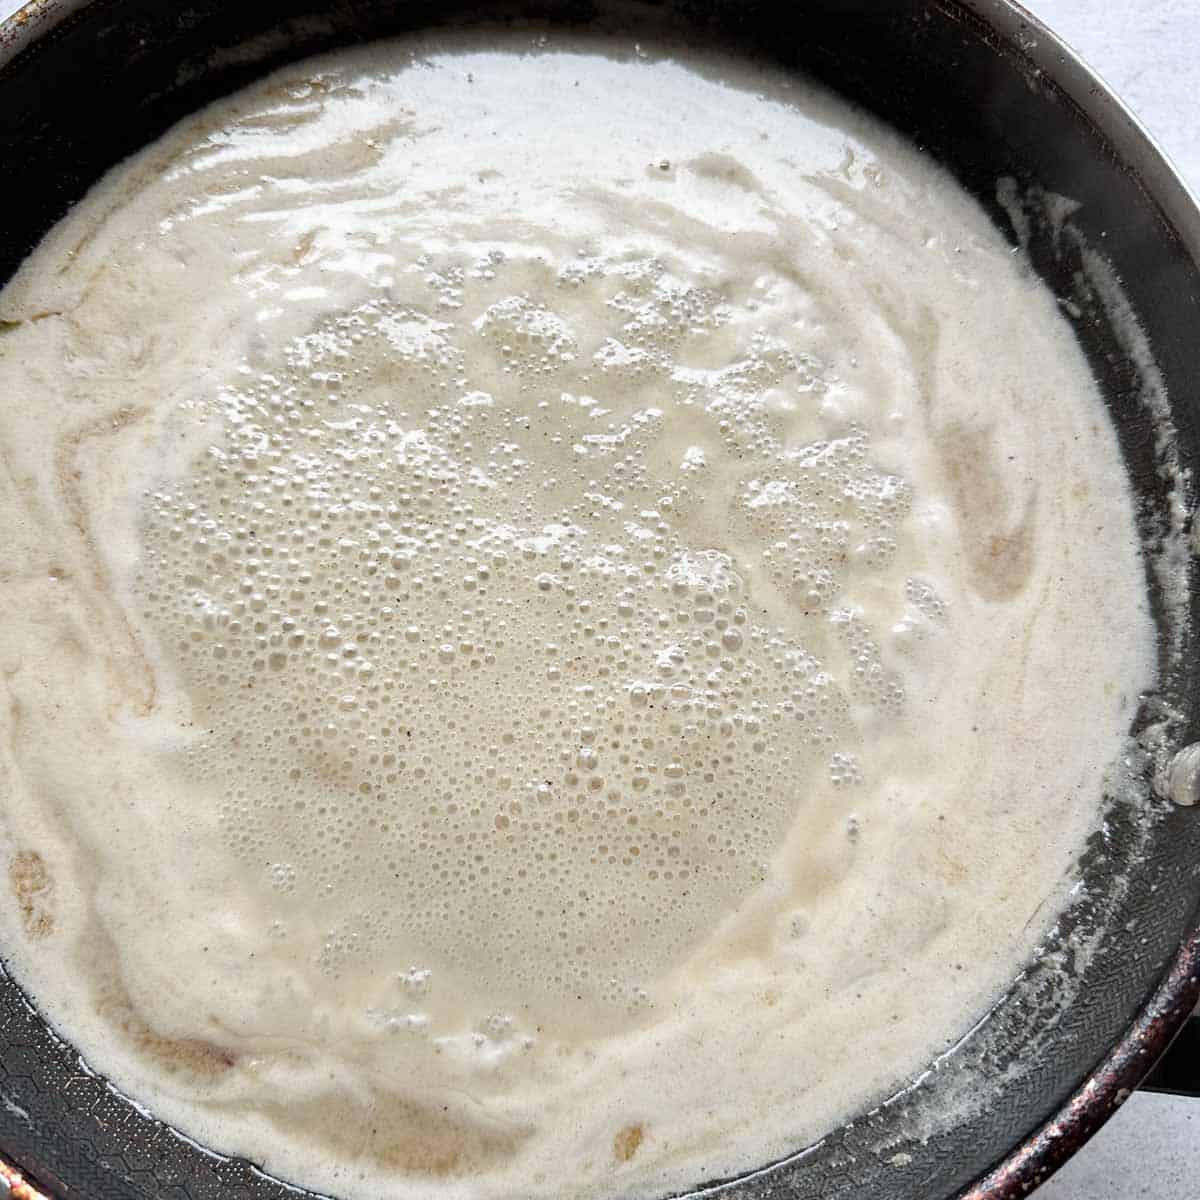 Badam halwa bubbling and reducing in a pan